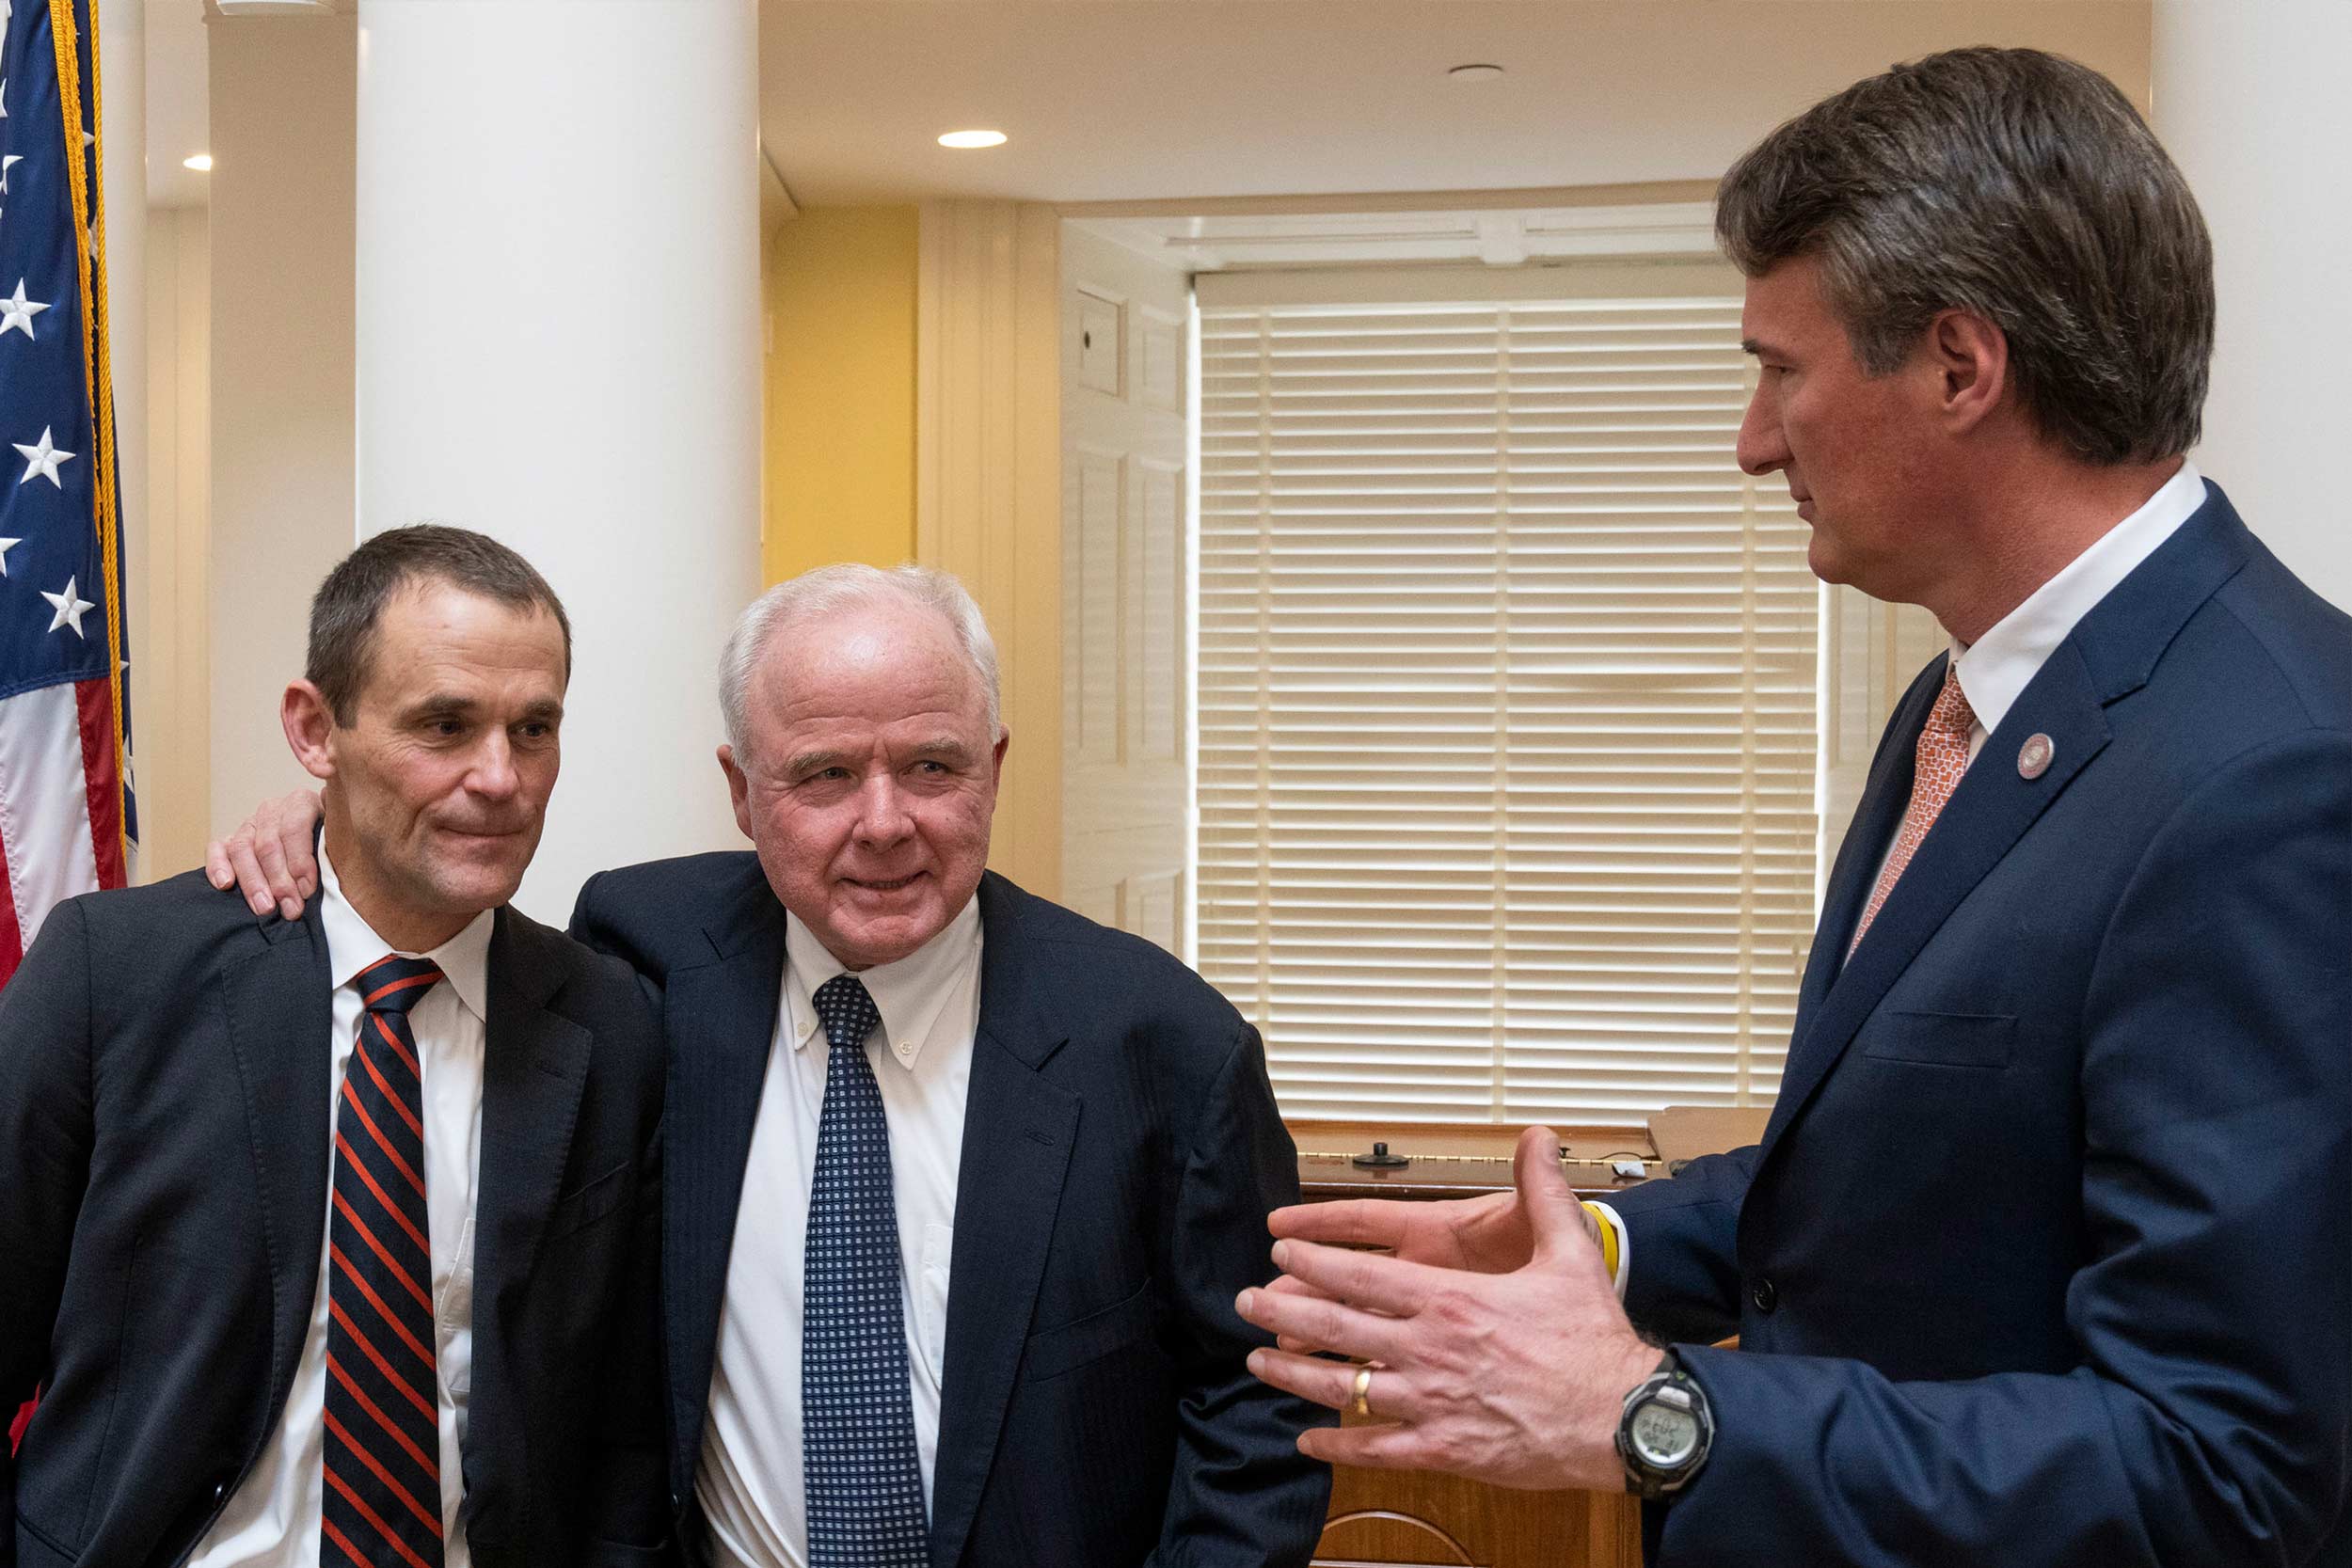 President Jim Ryan, Paul Manning and Gov. Glenn Youngkin talking together